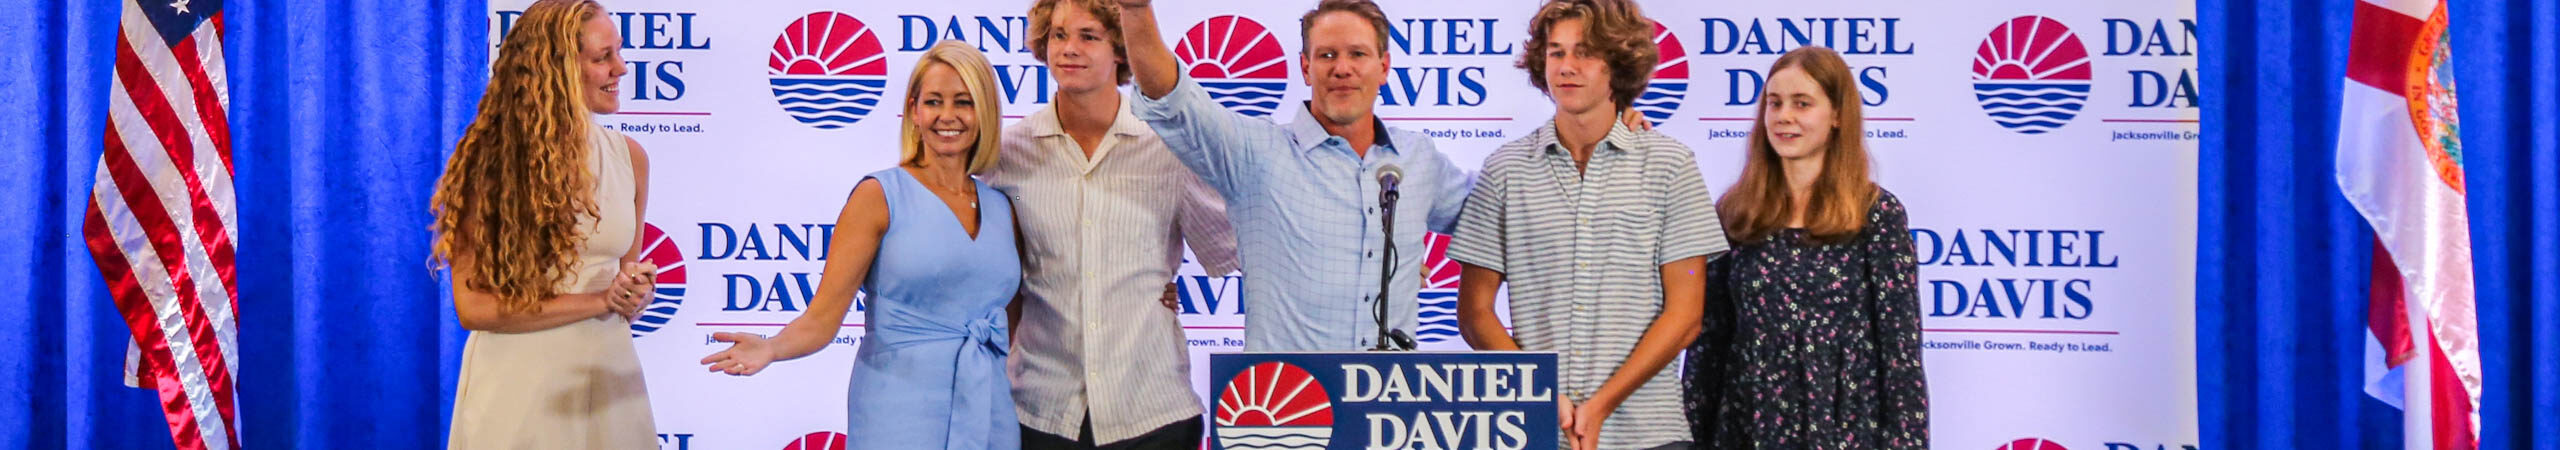 Daniel Davis Mayoral Announcement